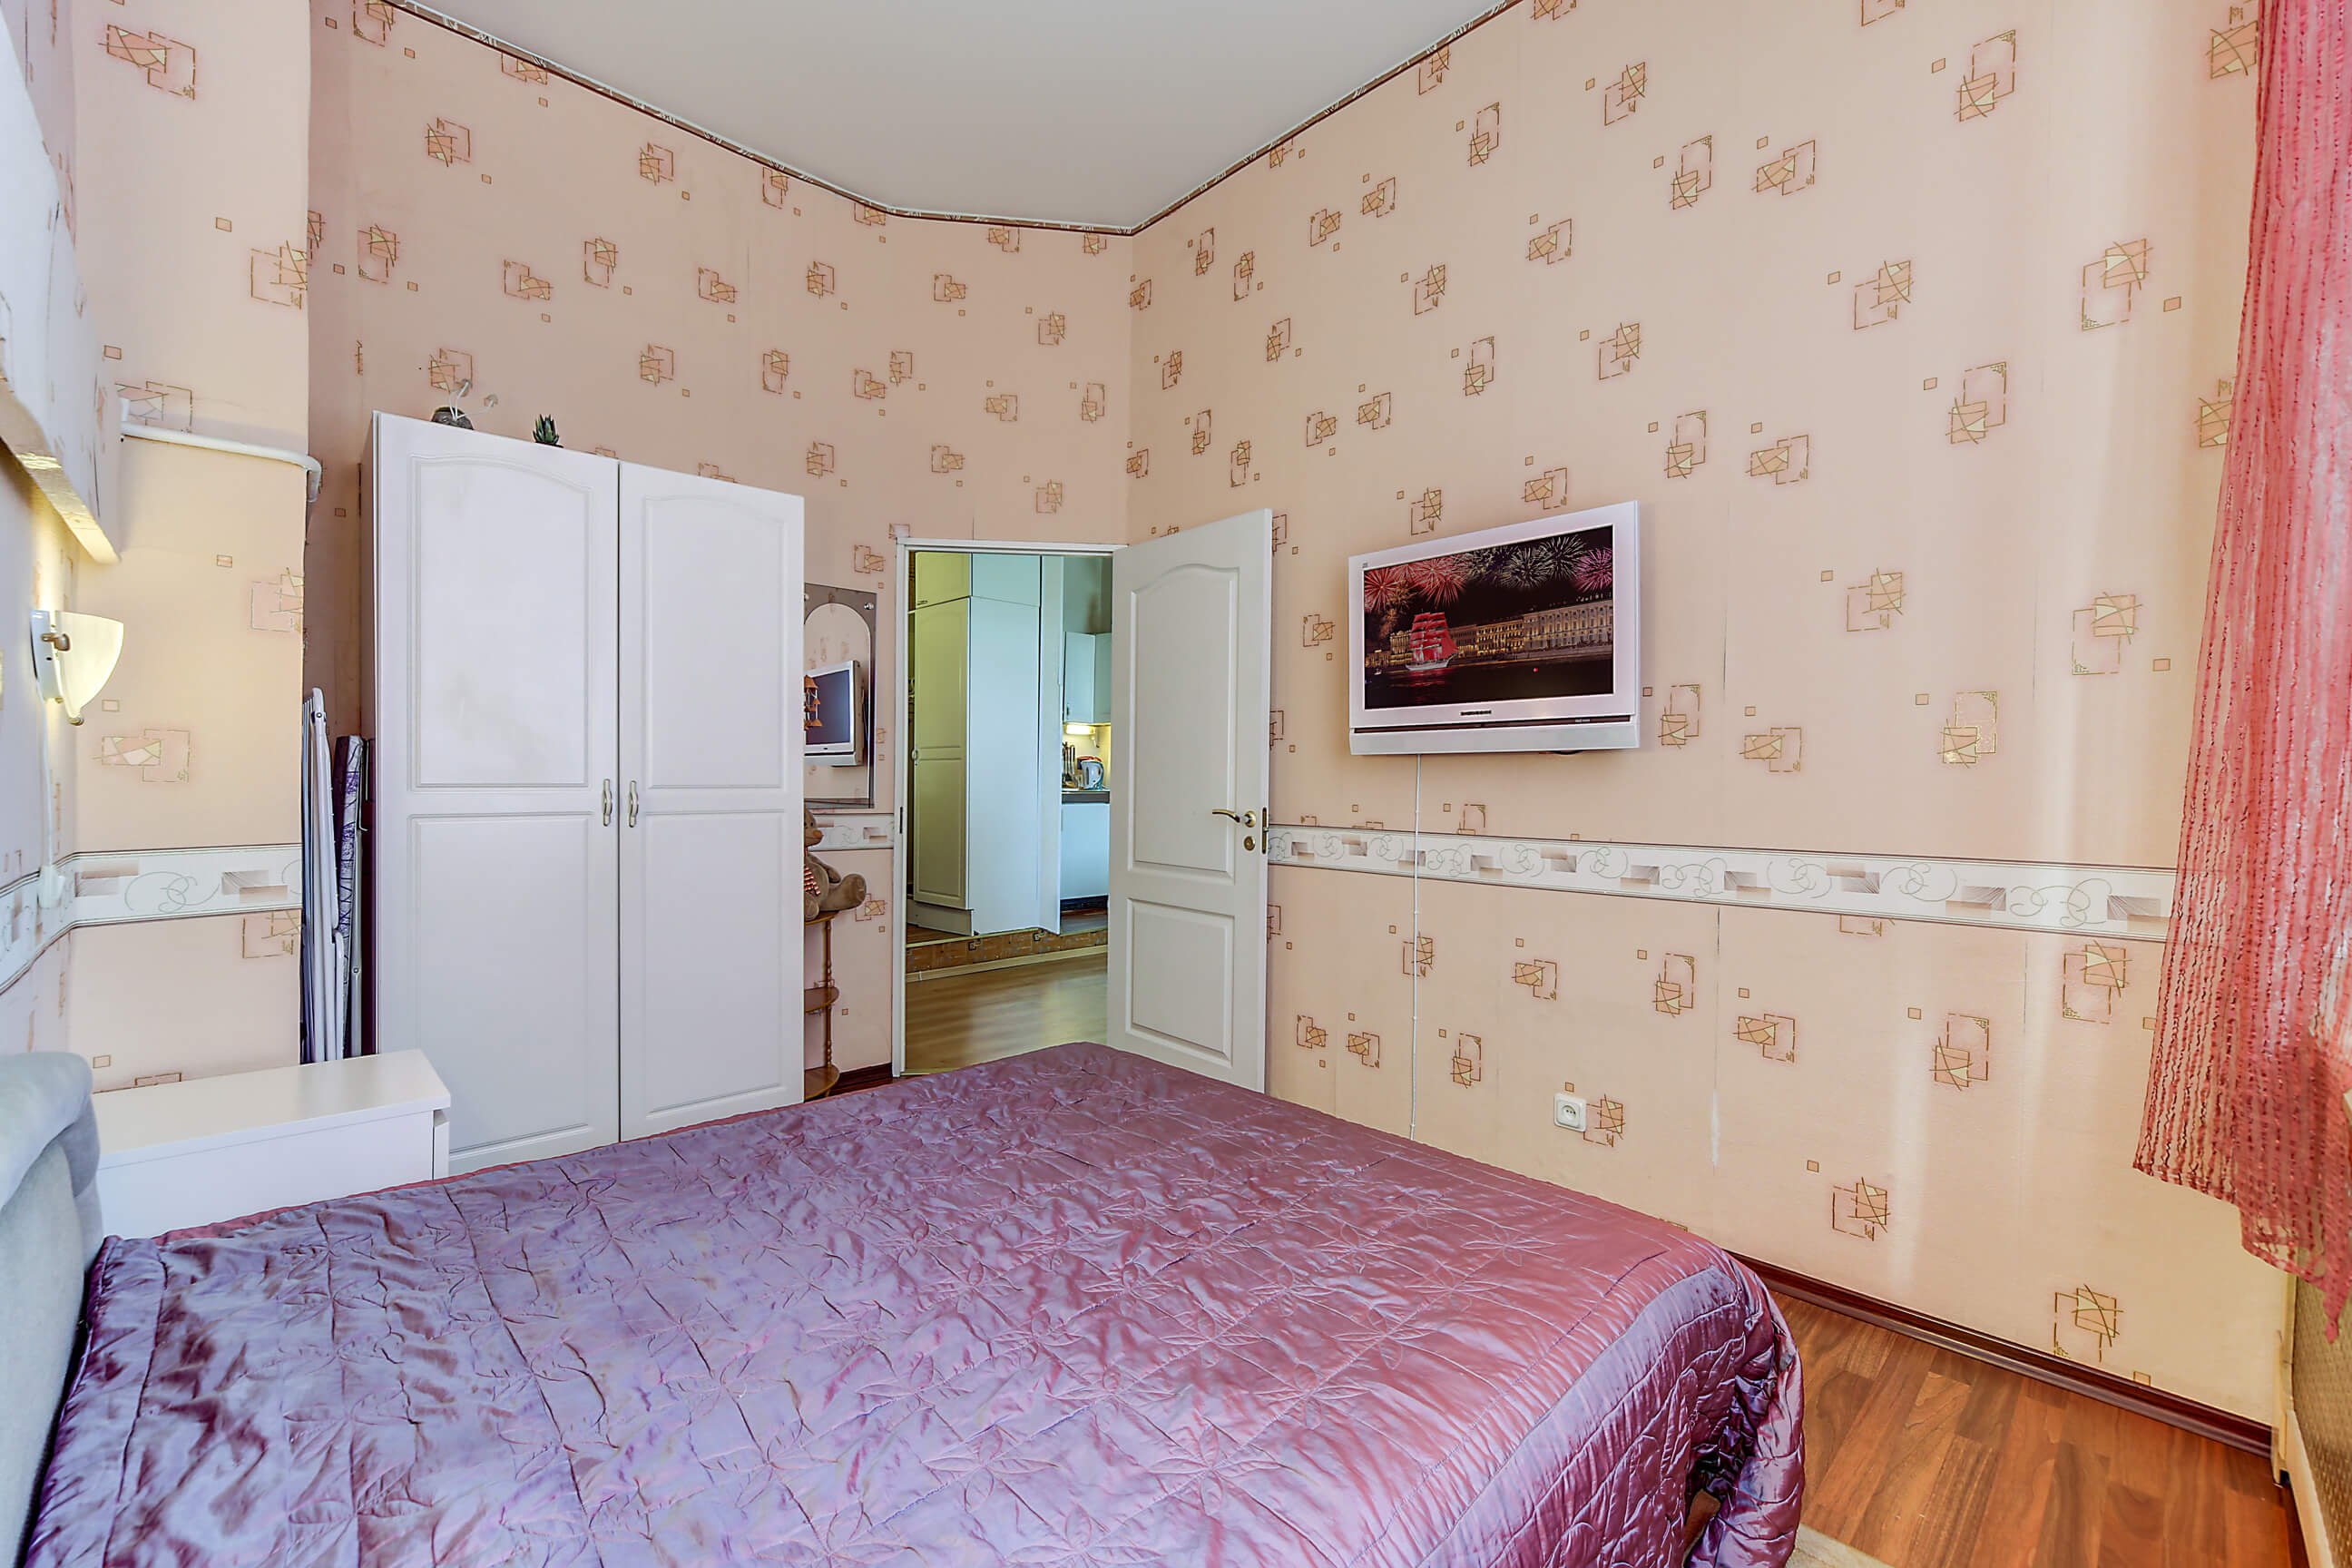 Однокомнатная квартира на ул.Набережная реки Фонтанки 50 (40кв.м) до 4 гостей